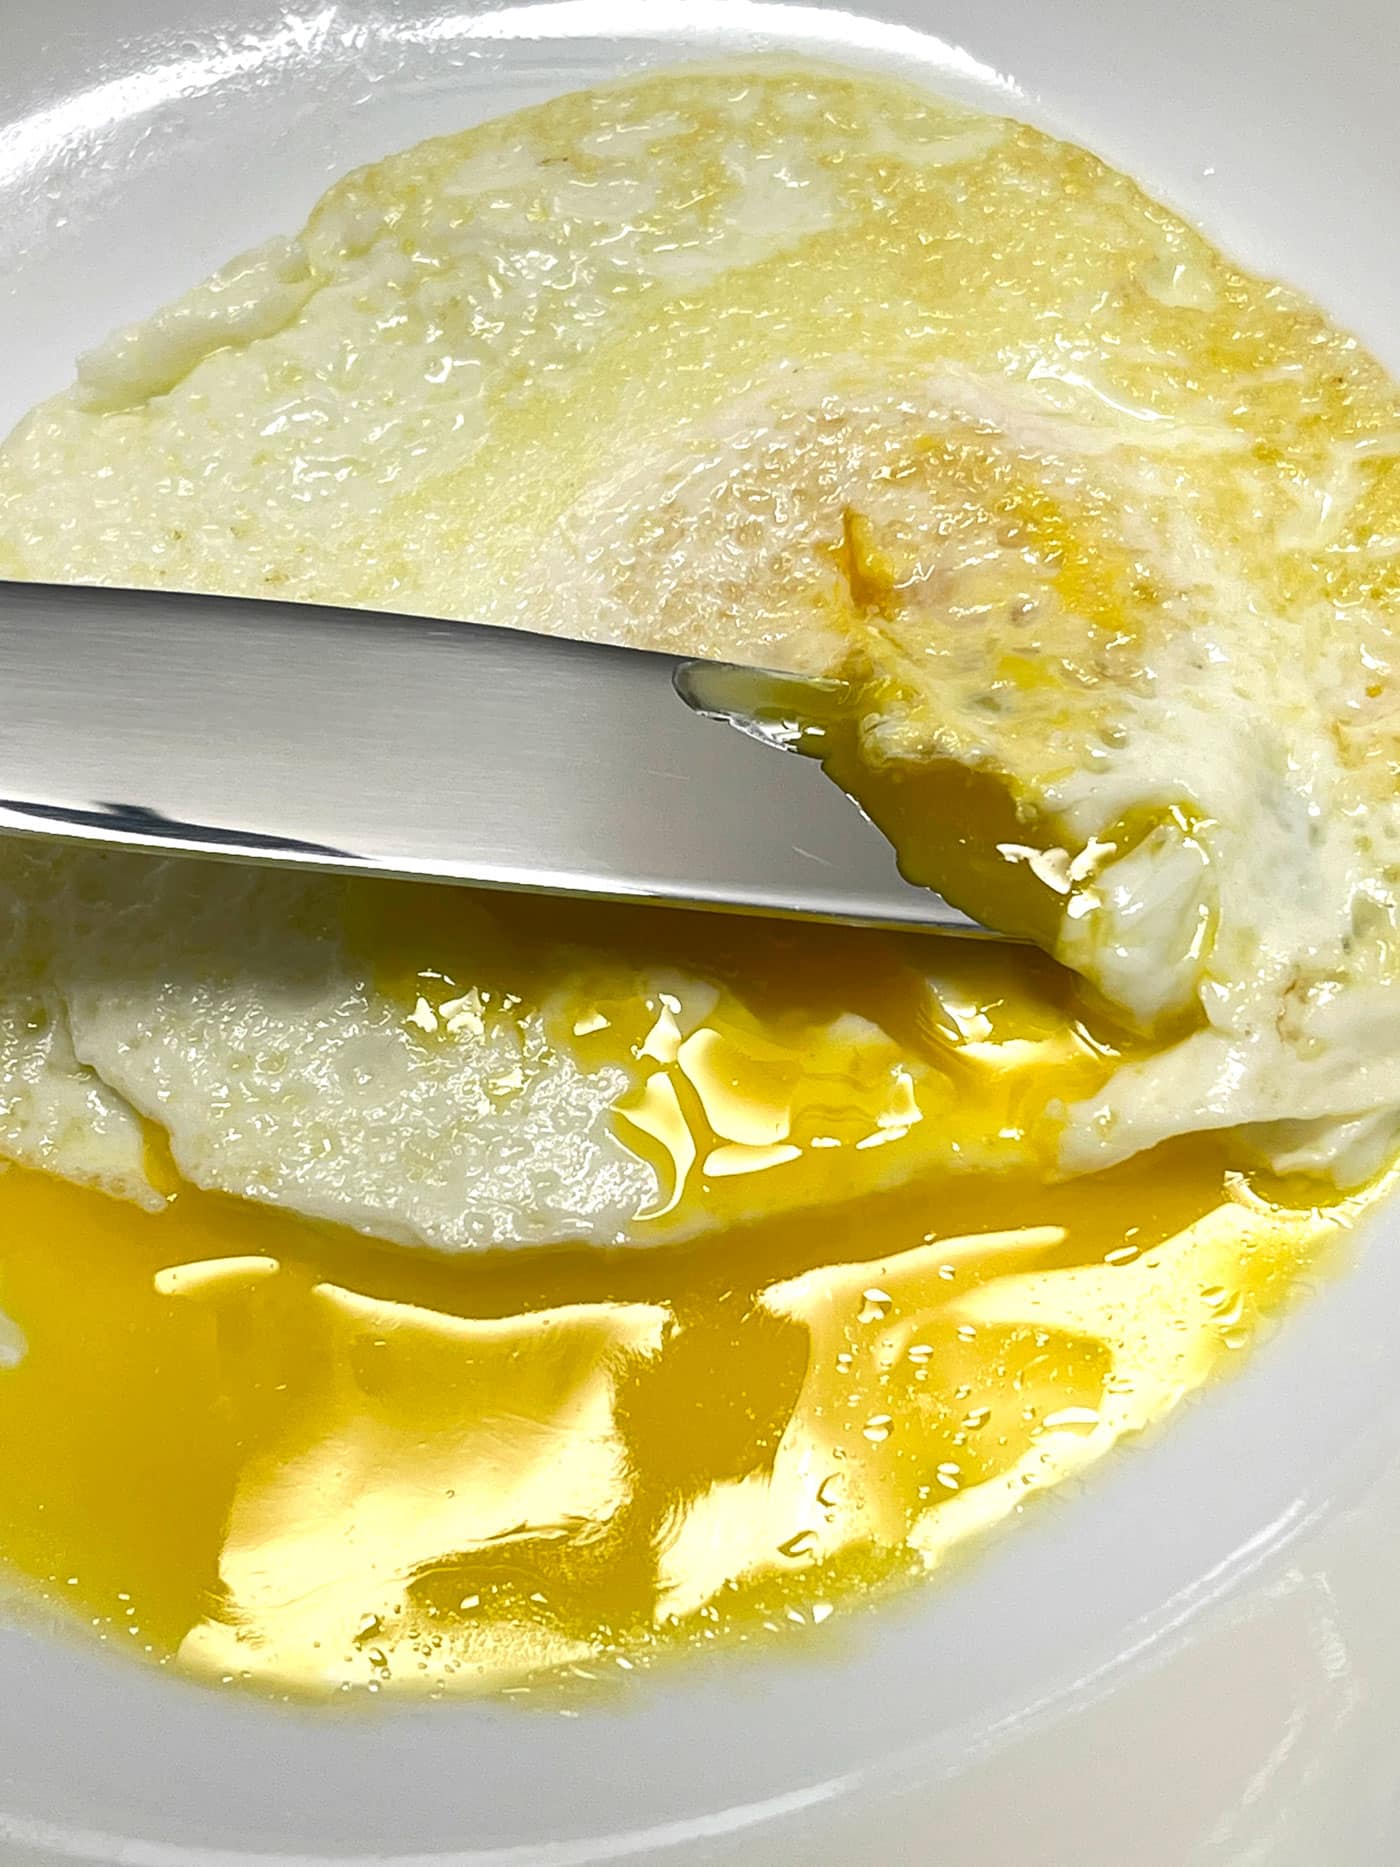 fried over easy eggs with runny egg yolks